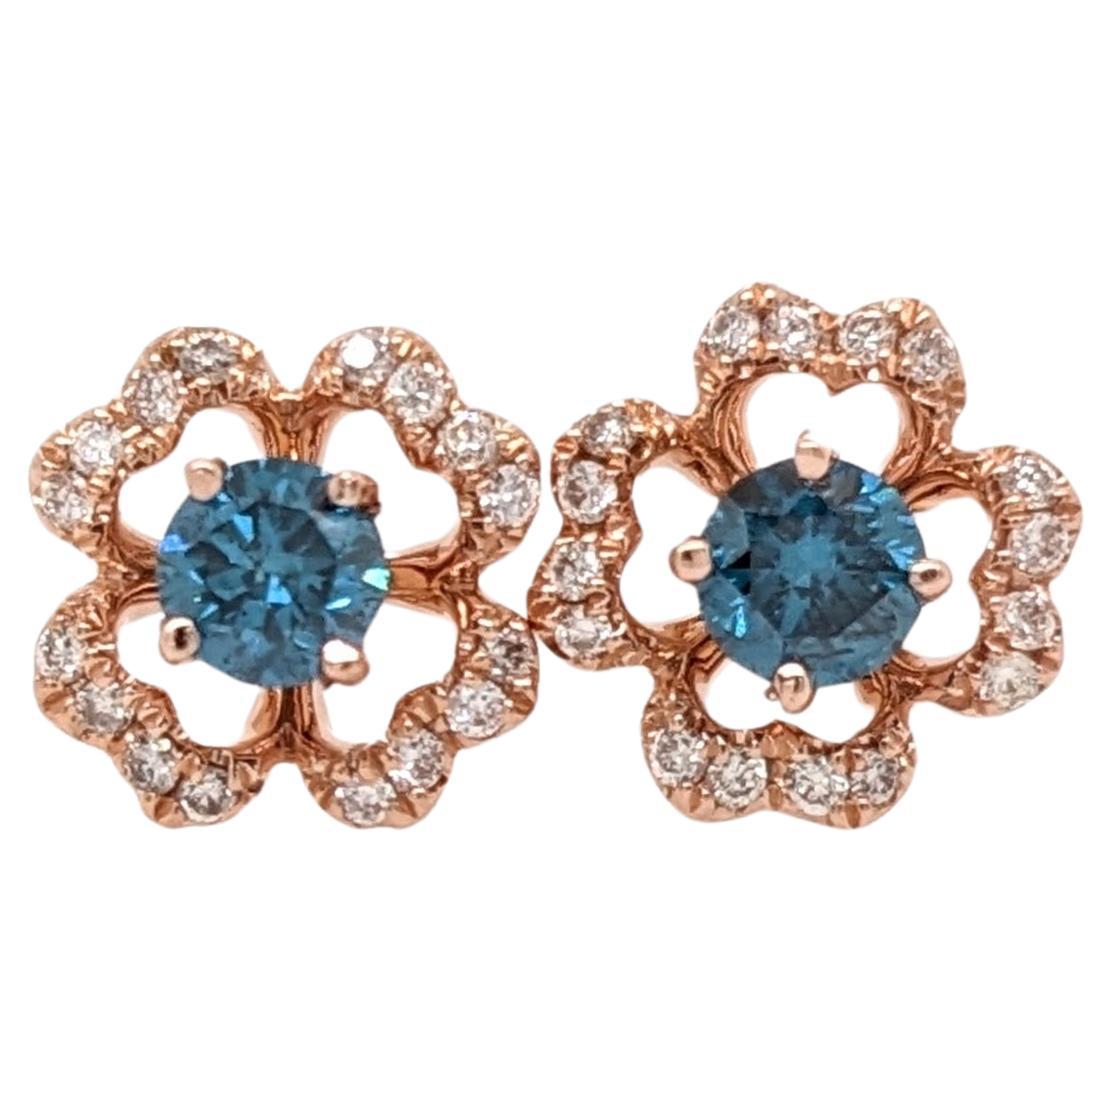 Blue Diamond Earrings w Diamond Flower Halo in Solid 14K Rose Gold Round 3.5mm